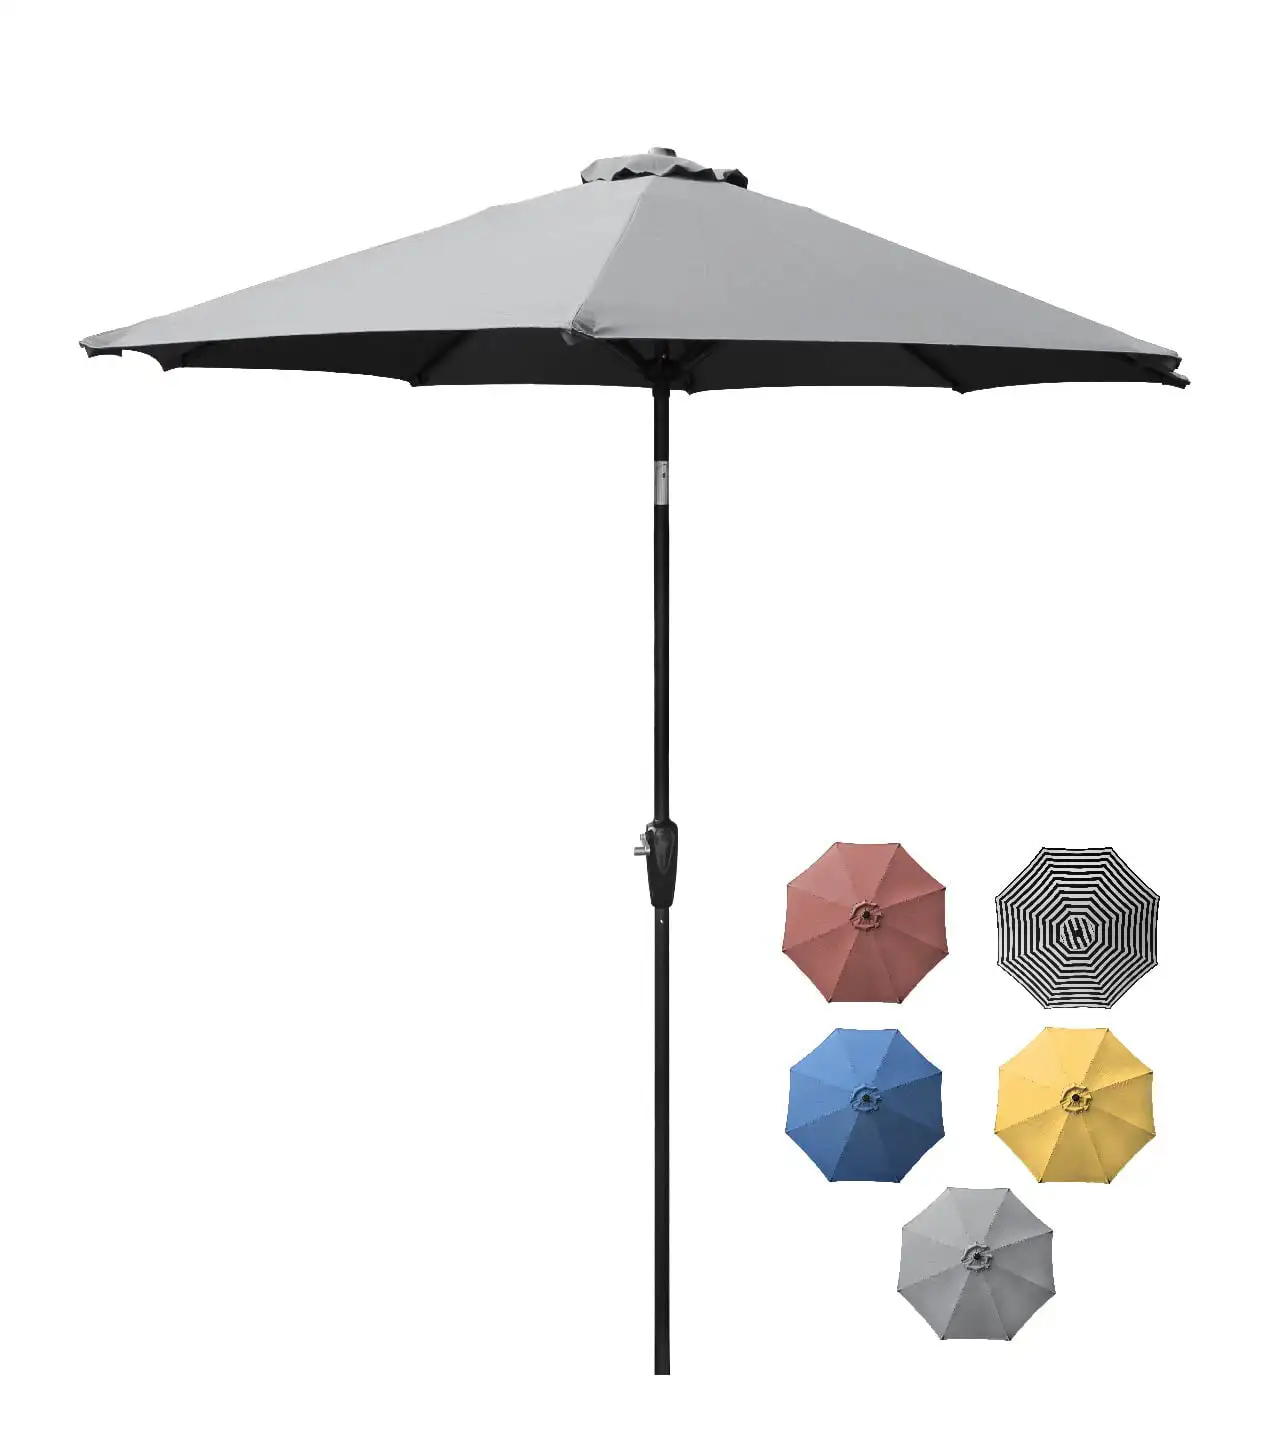 9ft Outdoor Aluminum Patio Umbrella, Round Market Umbrella with Push Button Tilt and Crank for Shade, Grey